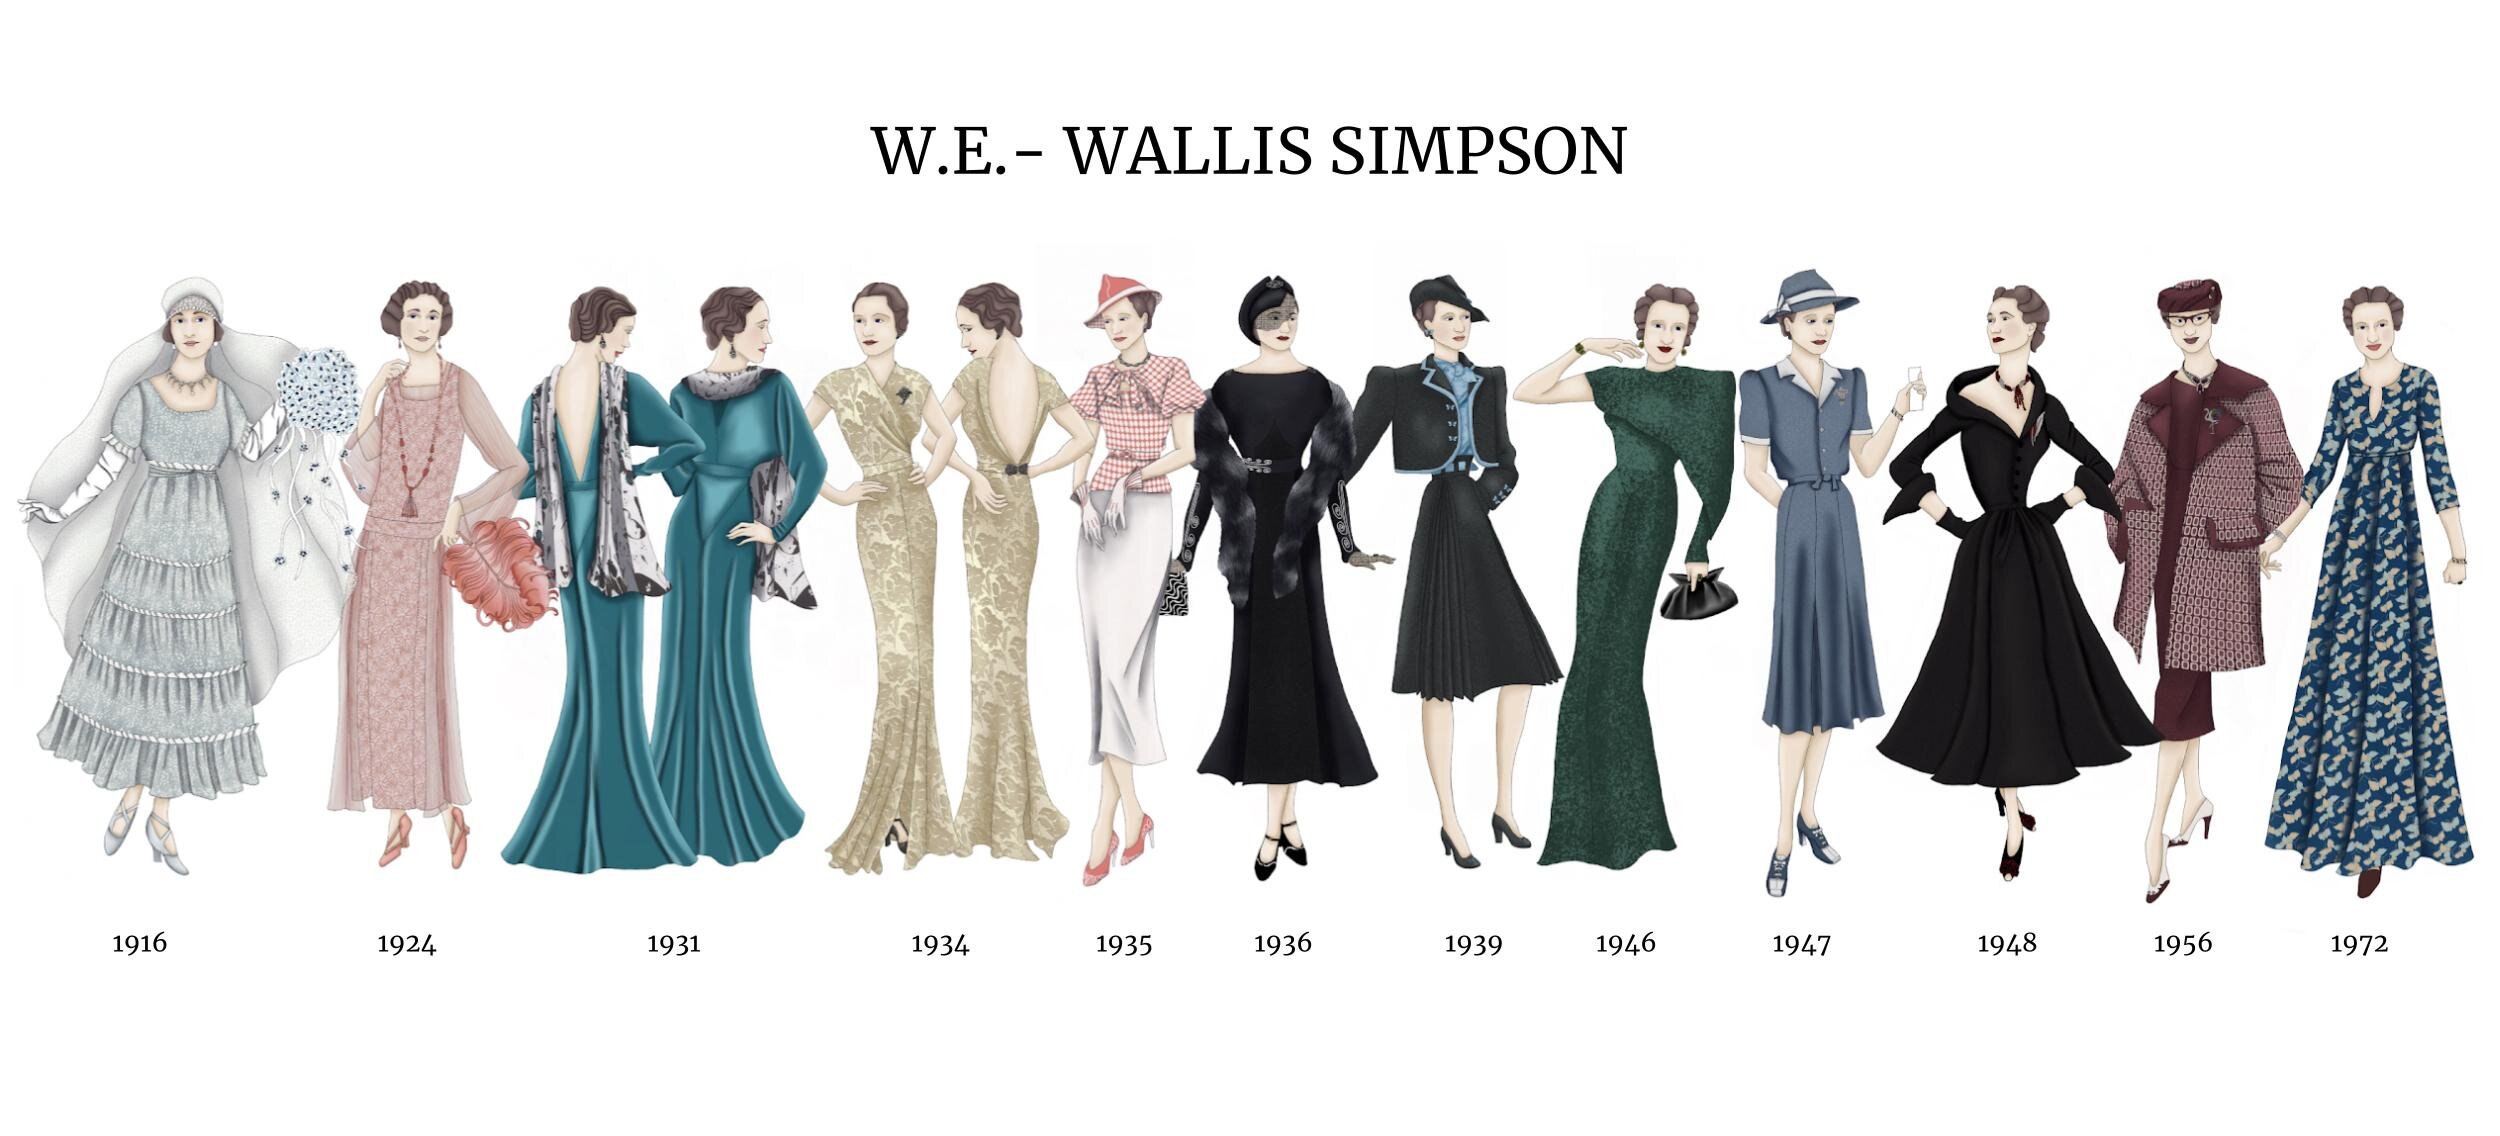 W.E. Wallis Simpson Timeline.jpg